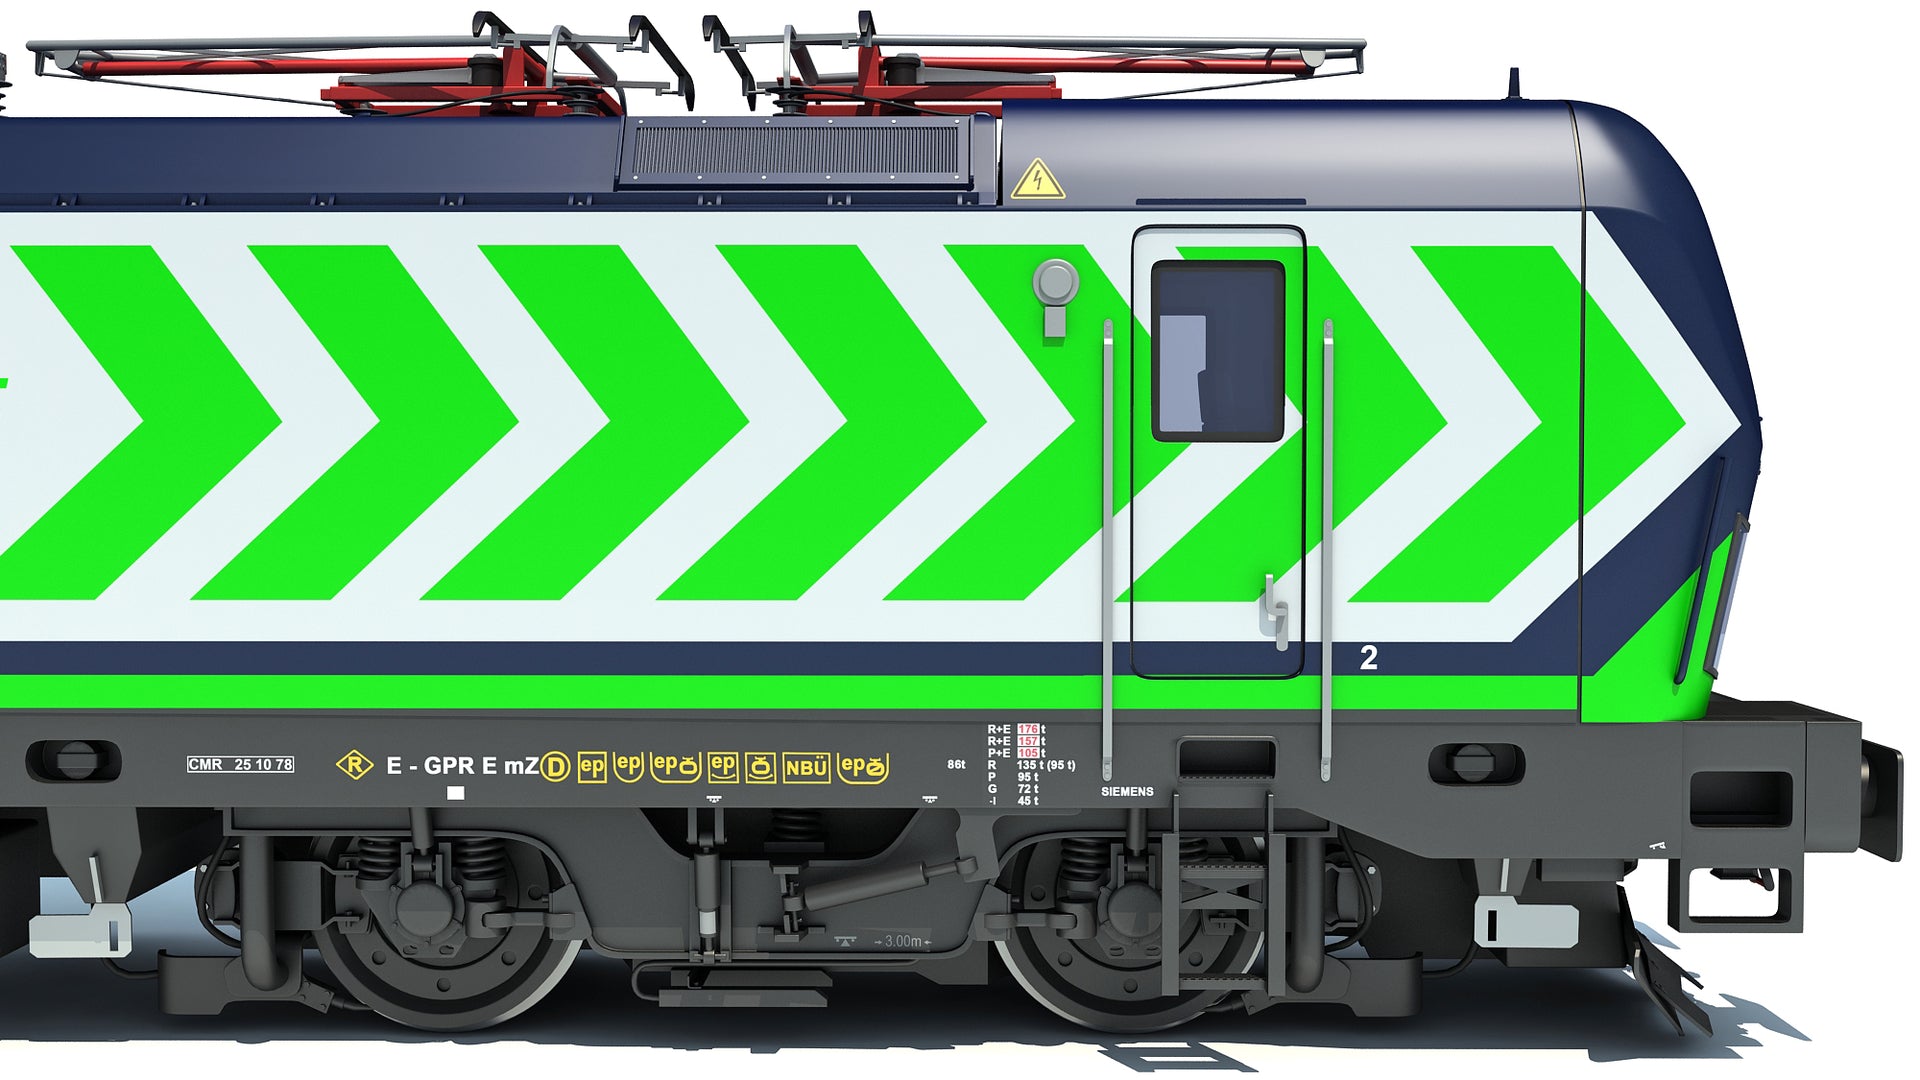 Siemens Vectron European Locomotive Leasing ELL